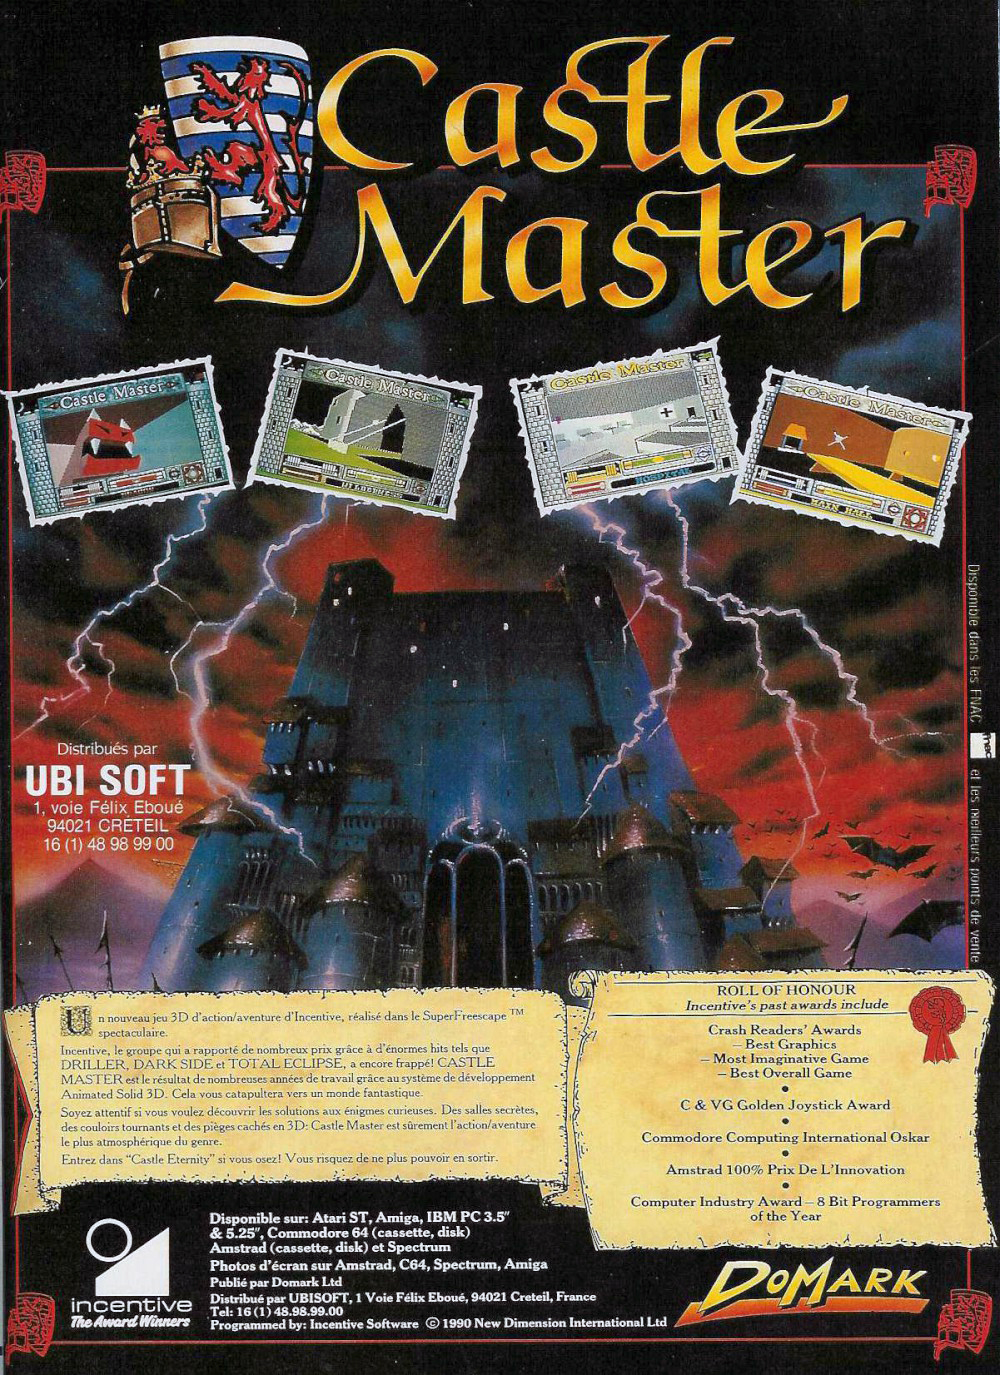 Atari ST Chessmaster 2000 (The) : scans, dump, download